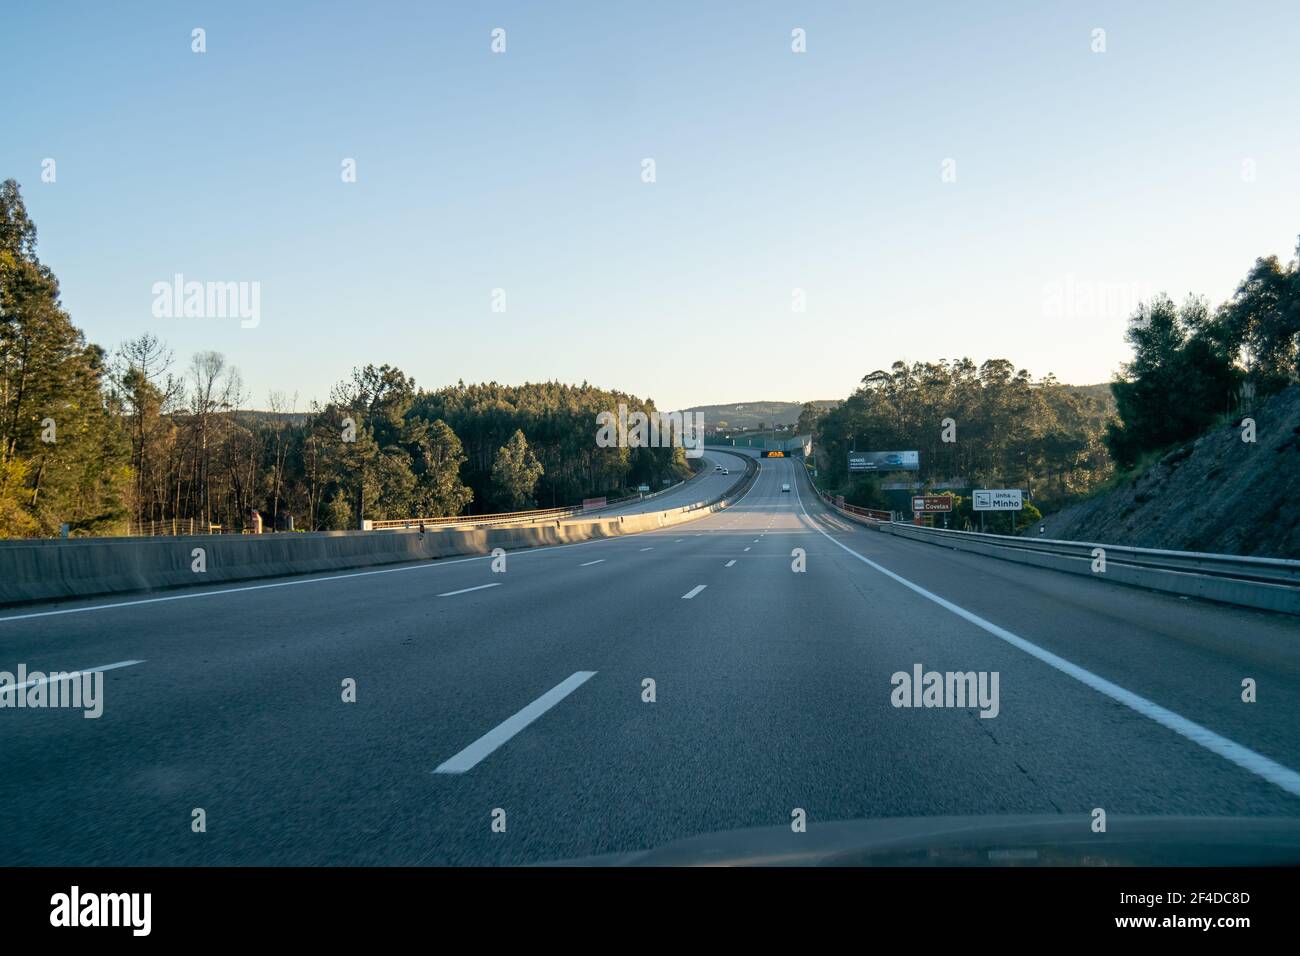 Conducir o viajar en autopistas o autopistas. Autopistas portuguesas de Brisa Auto-estradas de Portugal. Coche viajando por la autopista A3. Foto de stock